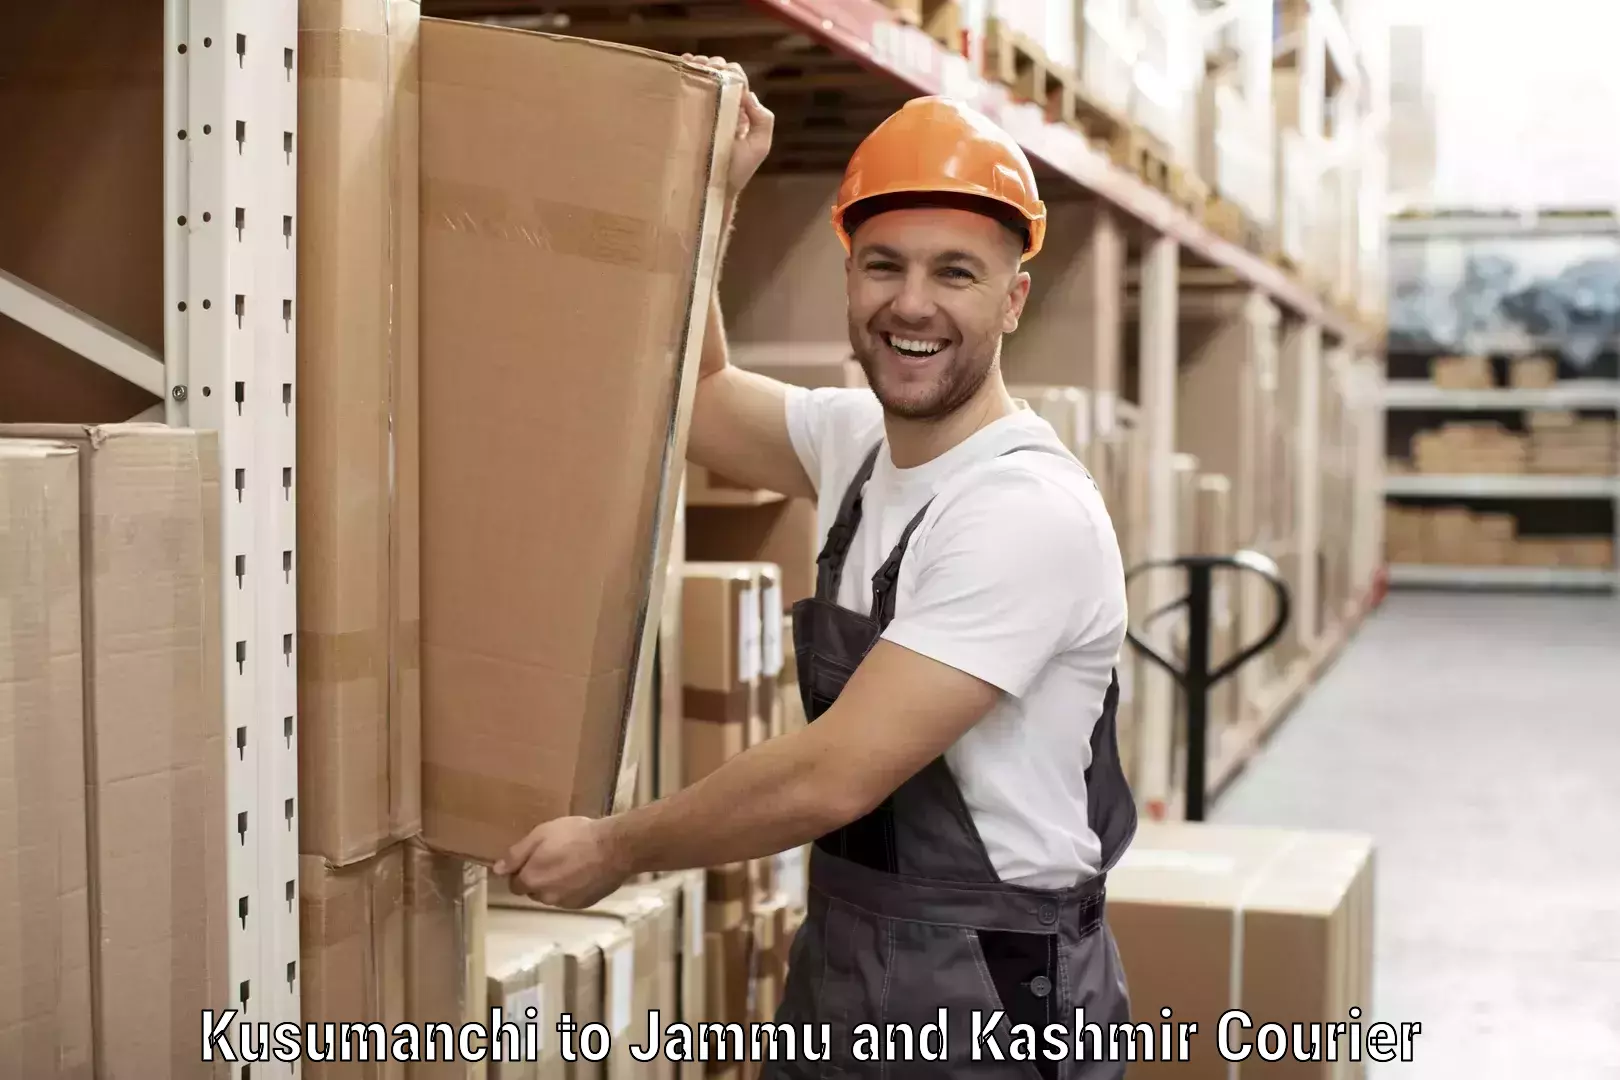 Smart logistics solutions Kusumanchi to Srinagar Kashmir